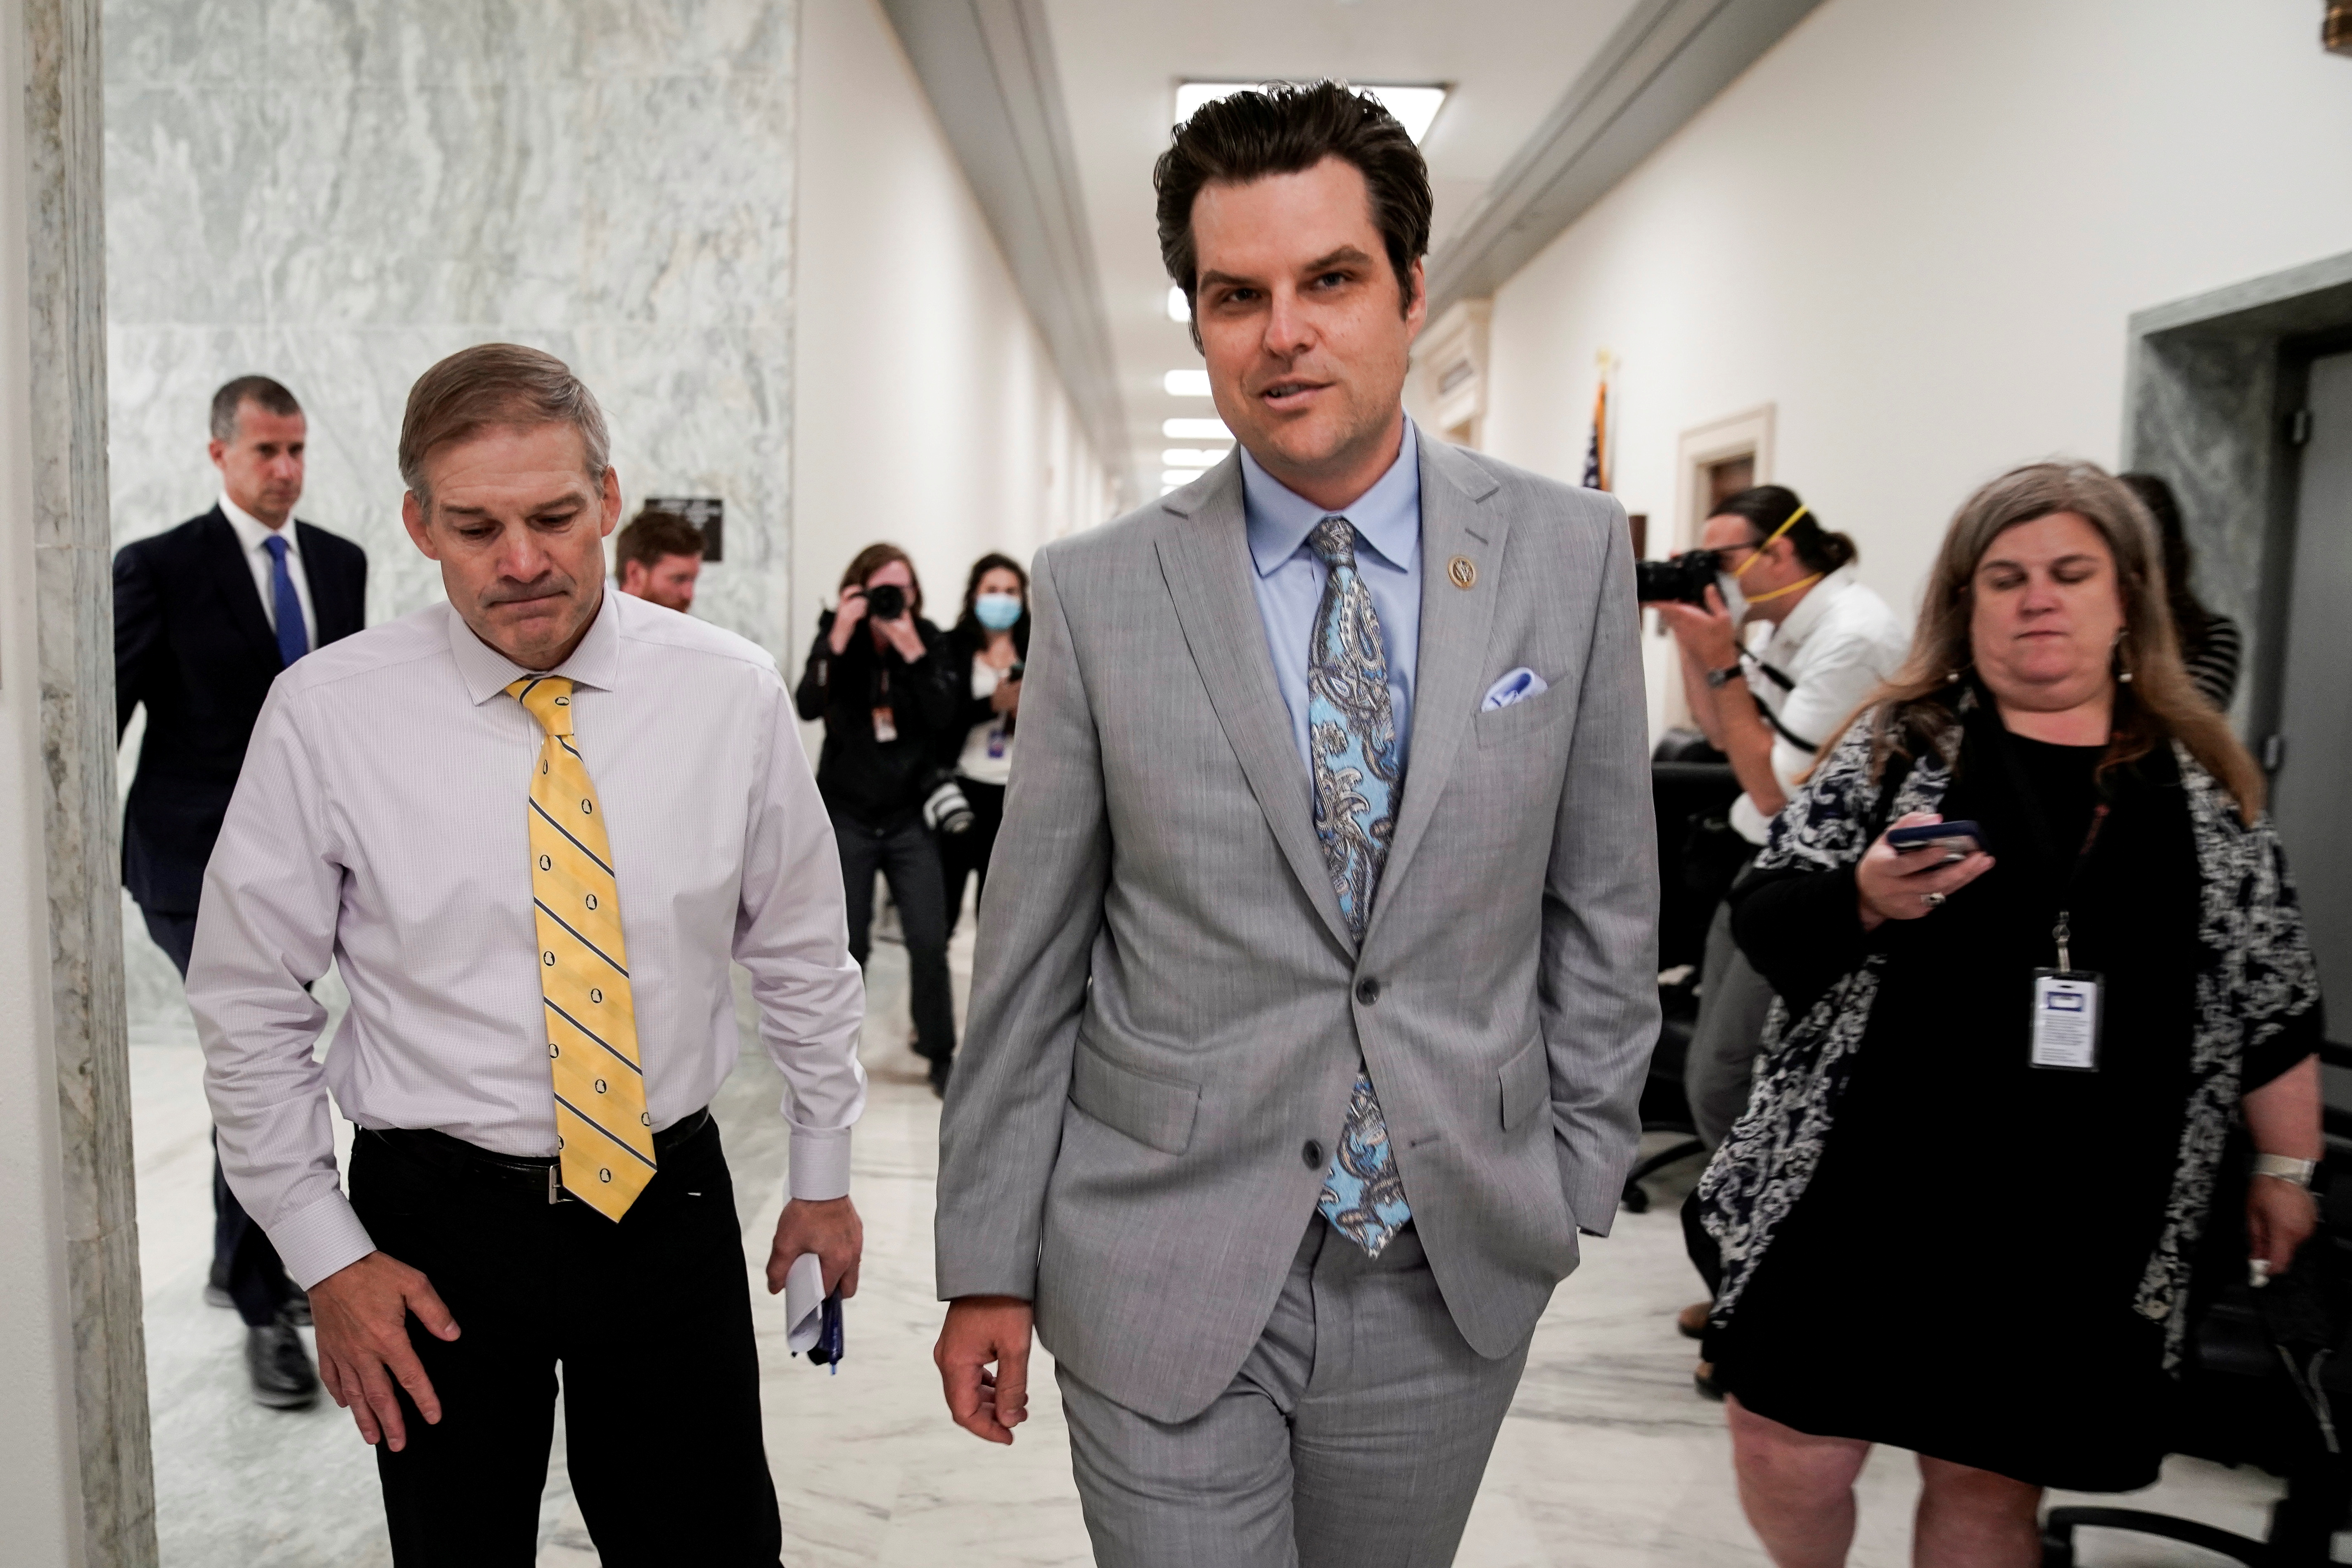 U.S. Reps. Jim Jordan (R-OH) and Matt Gaetz (R-FL) arrive to speak to the media on Capitol Hill in Washington